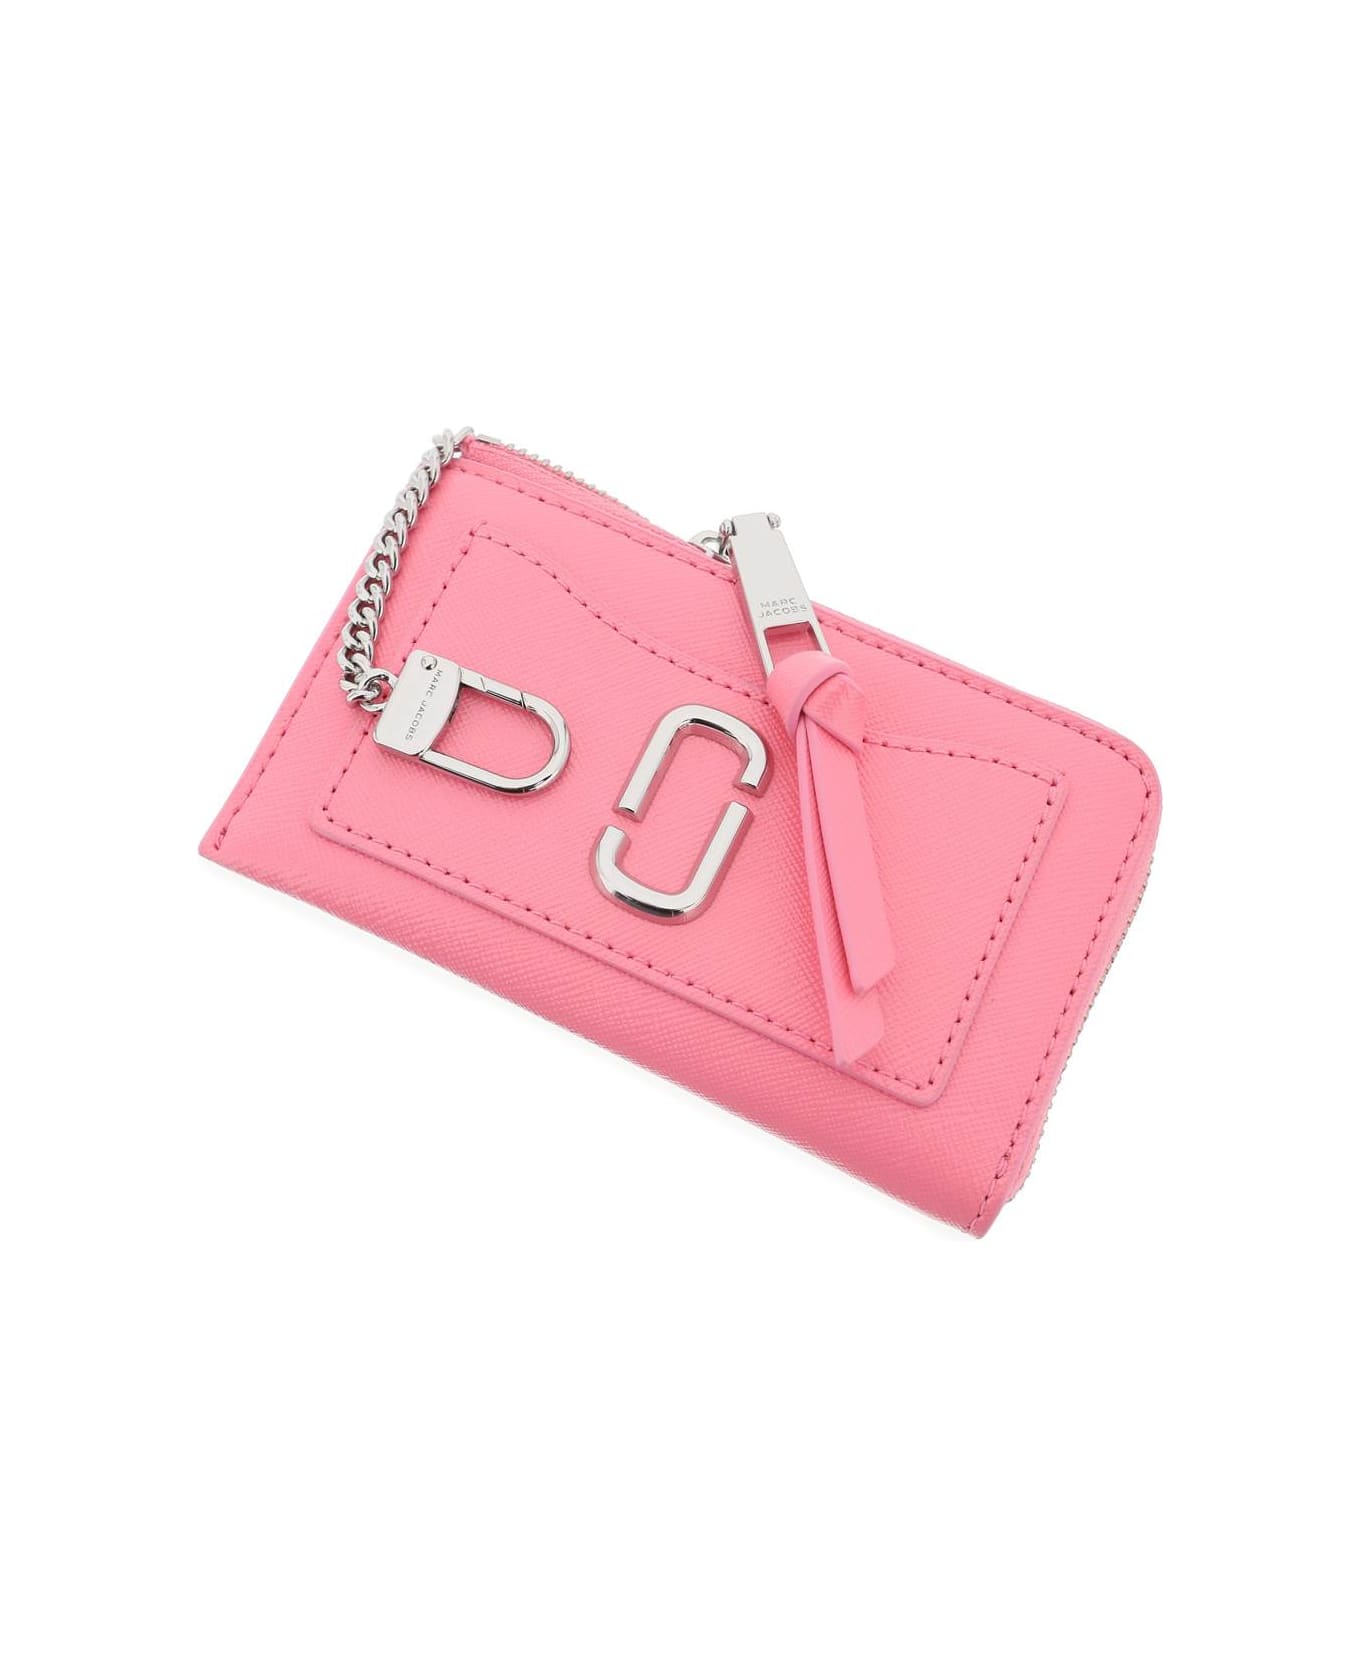 Marc Jacobs The Utility Snapshot Top Zip Multi Wallet - PETAL PINK (Pink)